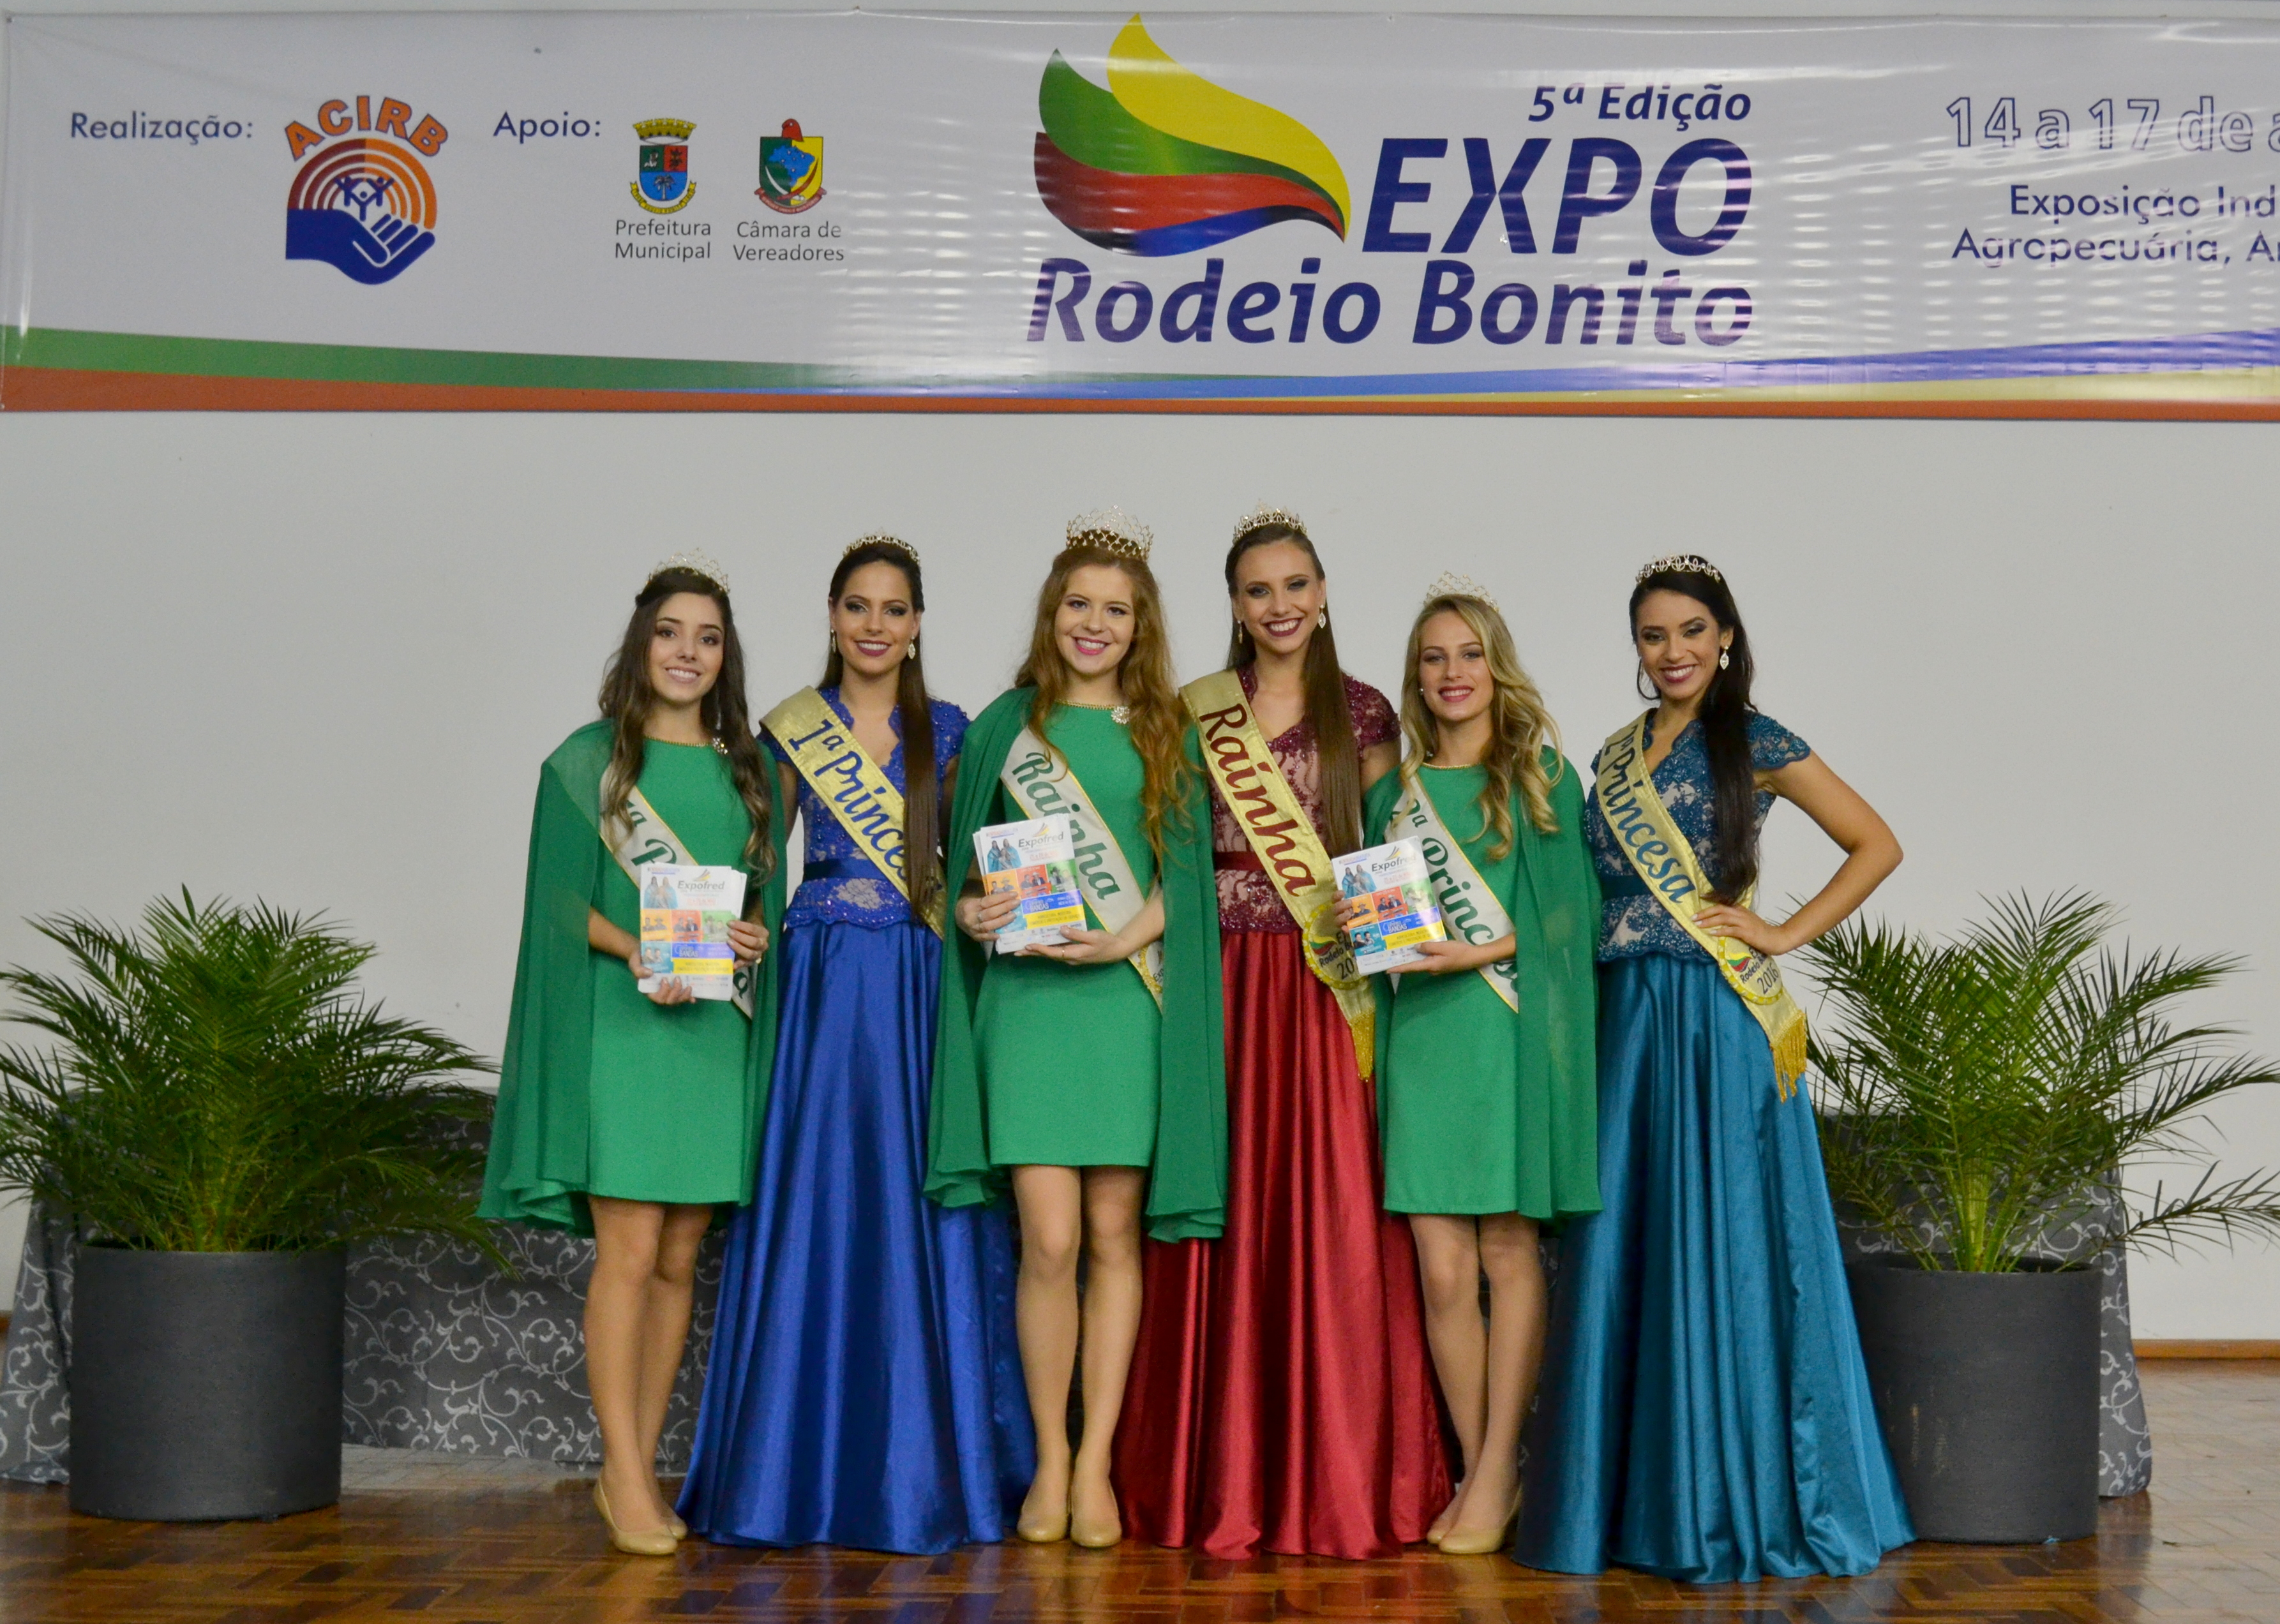 Expo Rodeio Bonito